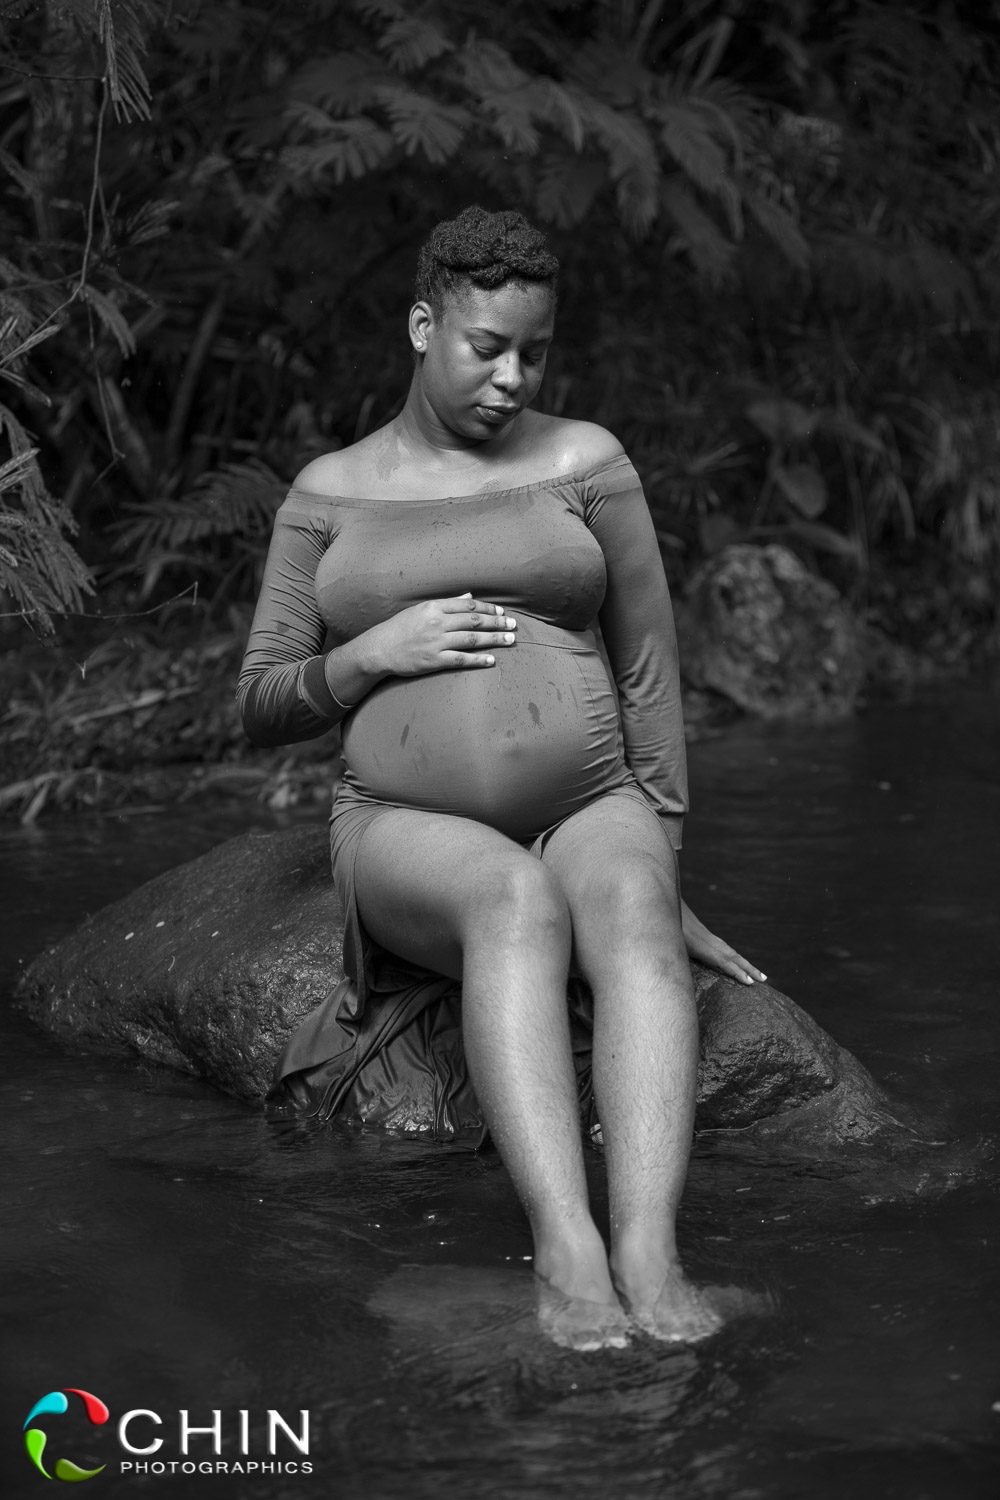 Jamaican Maternity Photographer